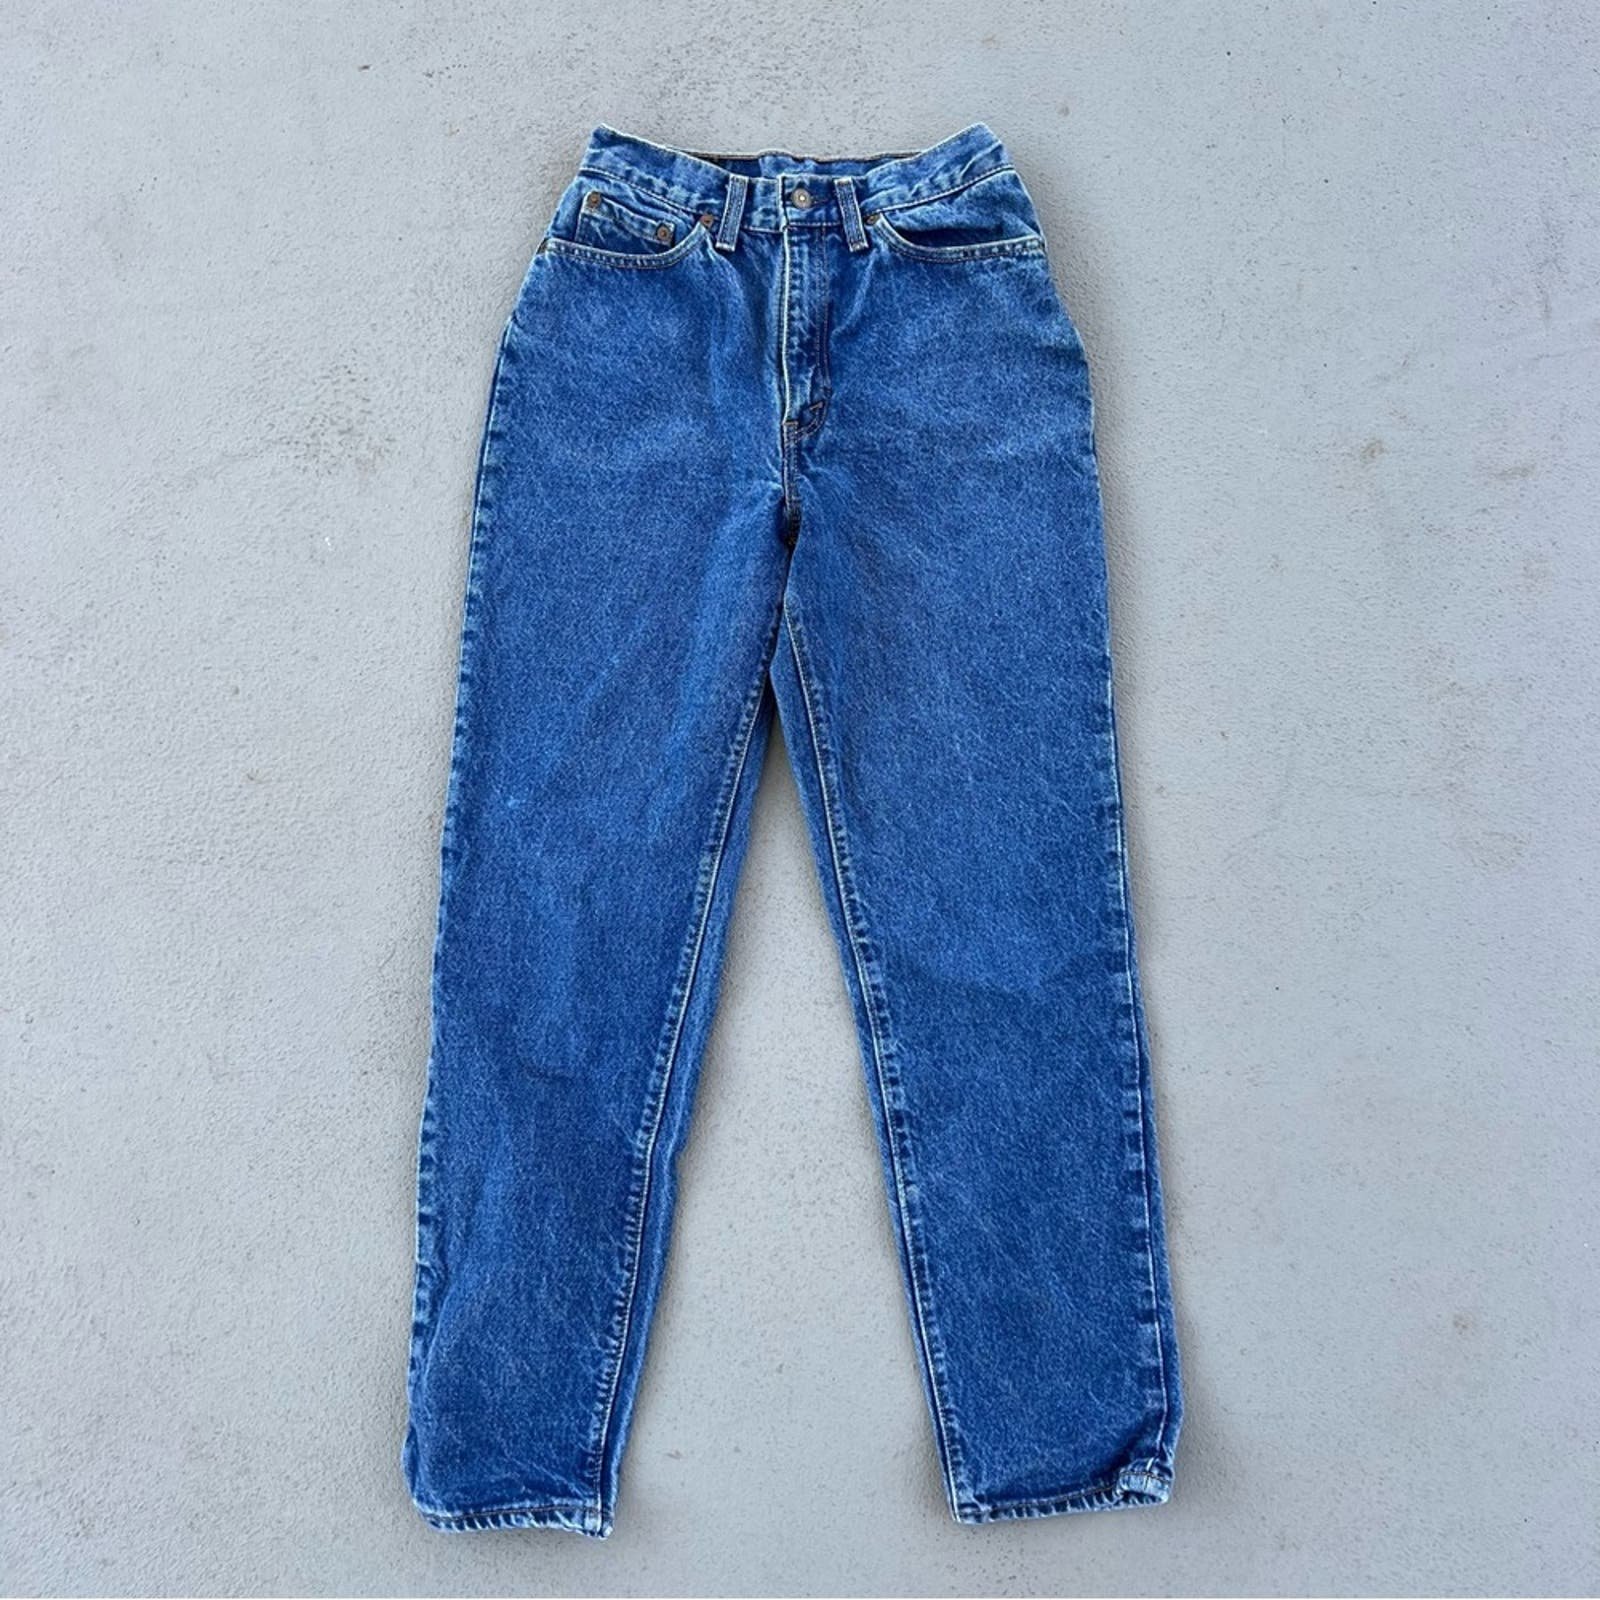 High quality Vintage 80s Levi’s women’s 505 jeans taper leg mom style size 9 K9oq8D8Lb Cheap